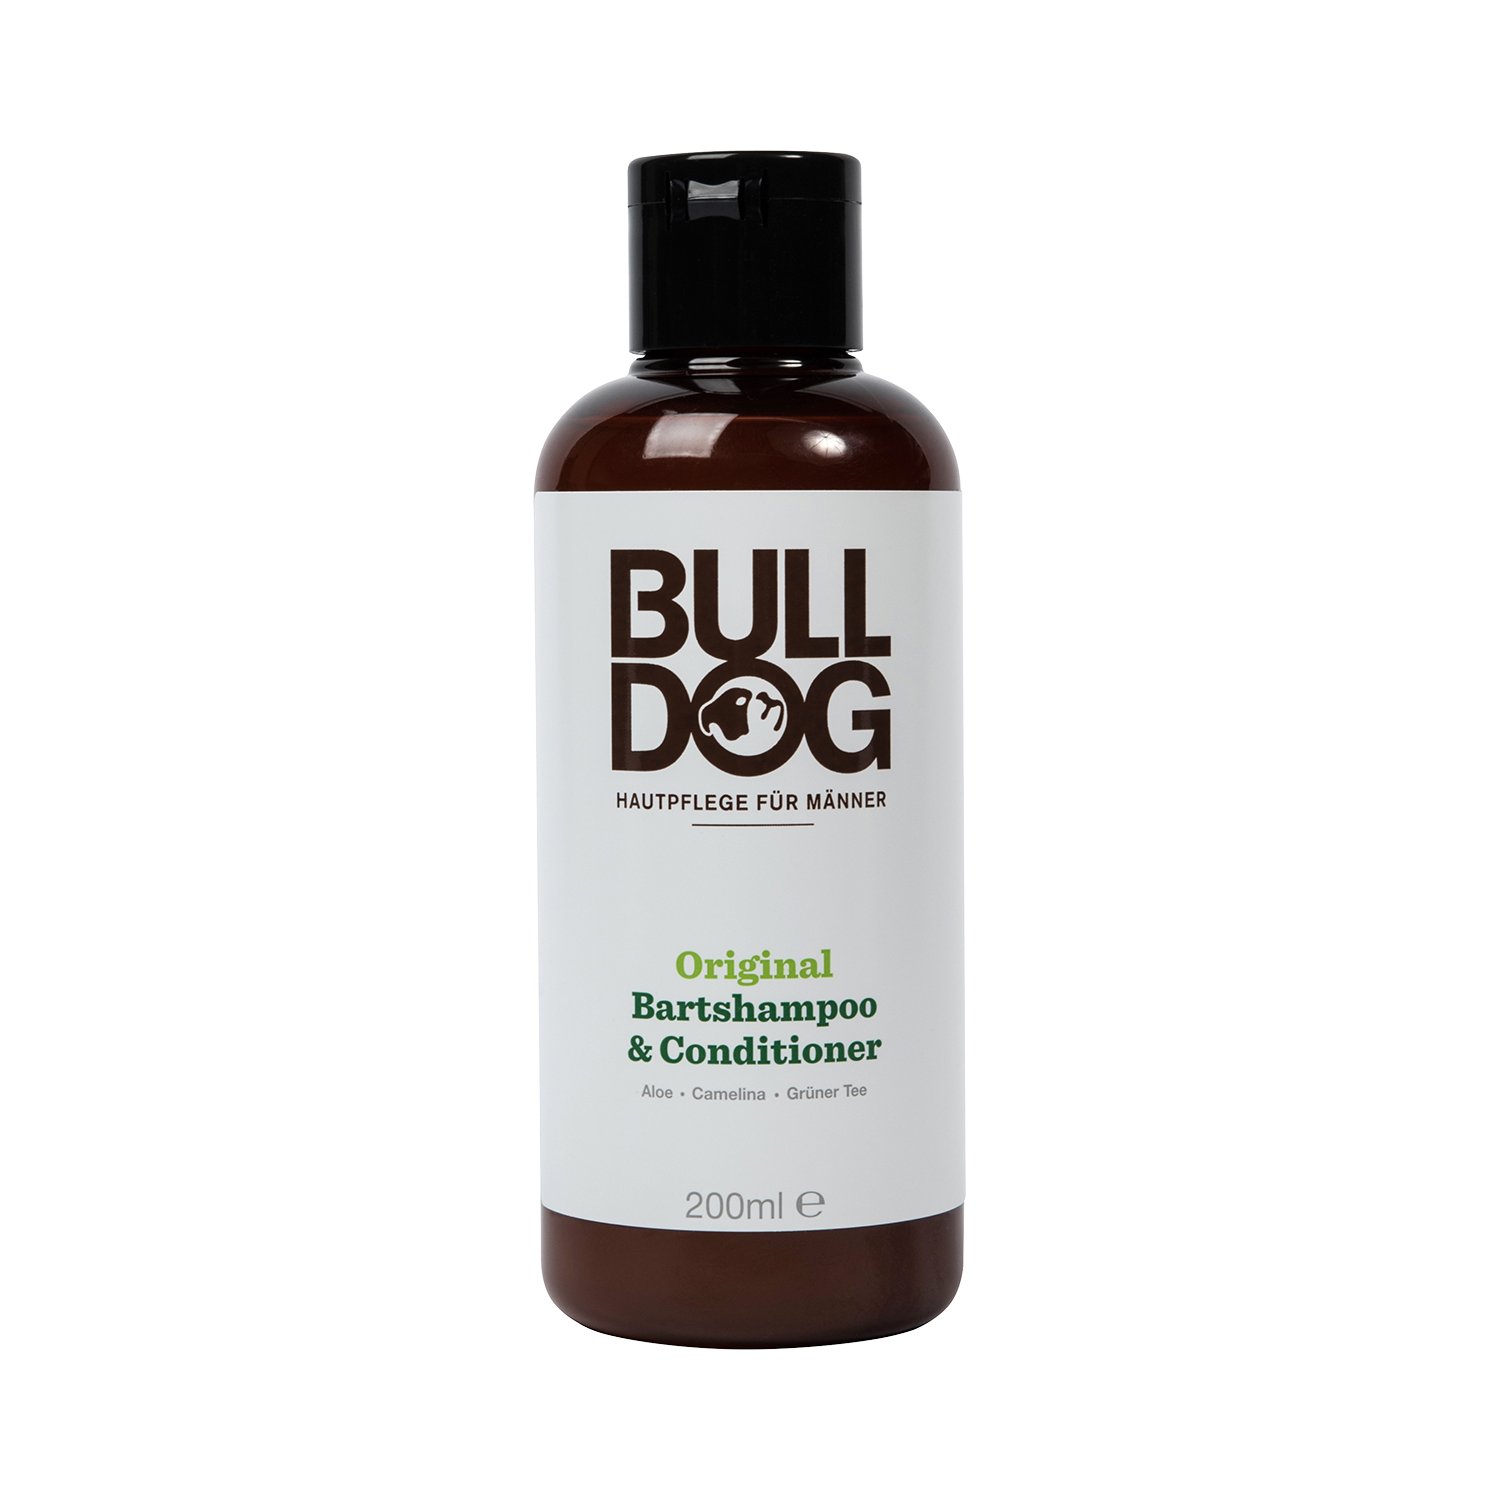 Bulldog - Original Bart Shampoo & Conditioner